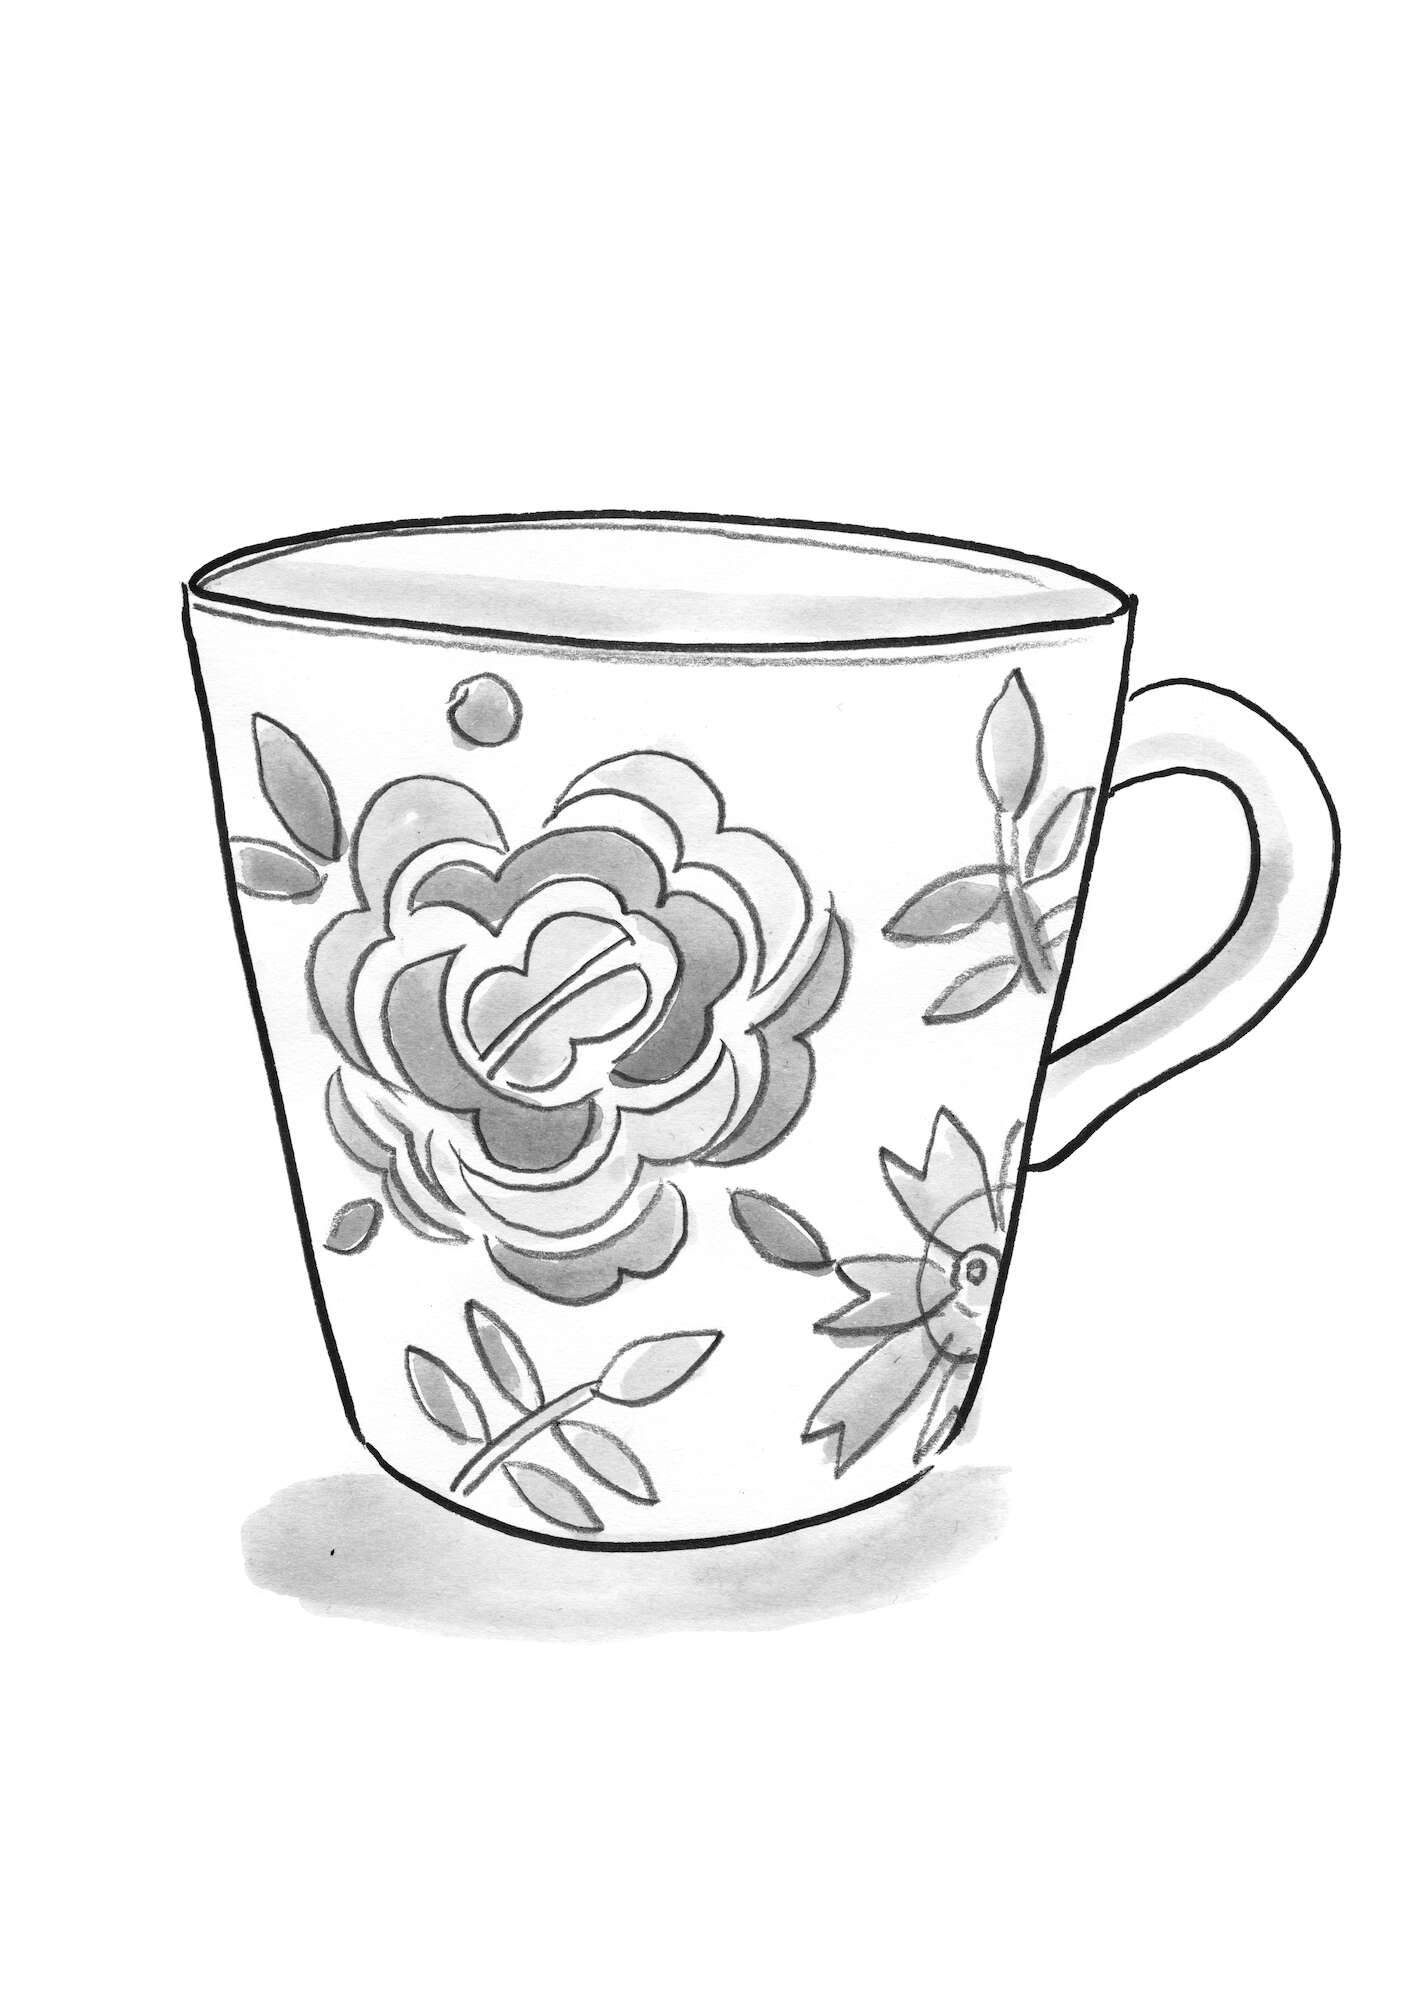 “Karin” ceramic teacup